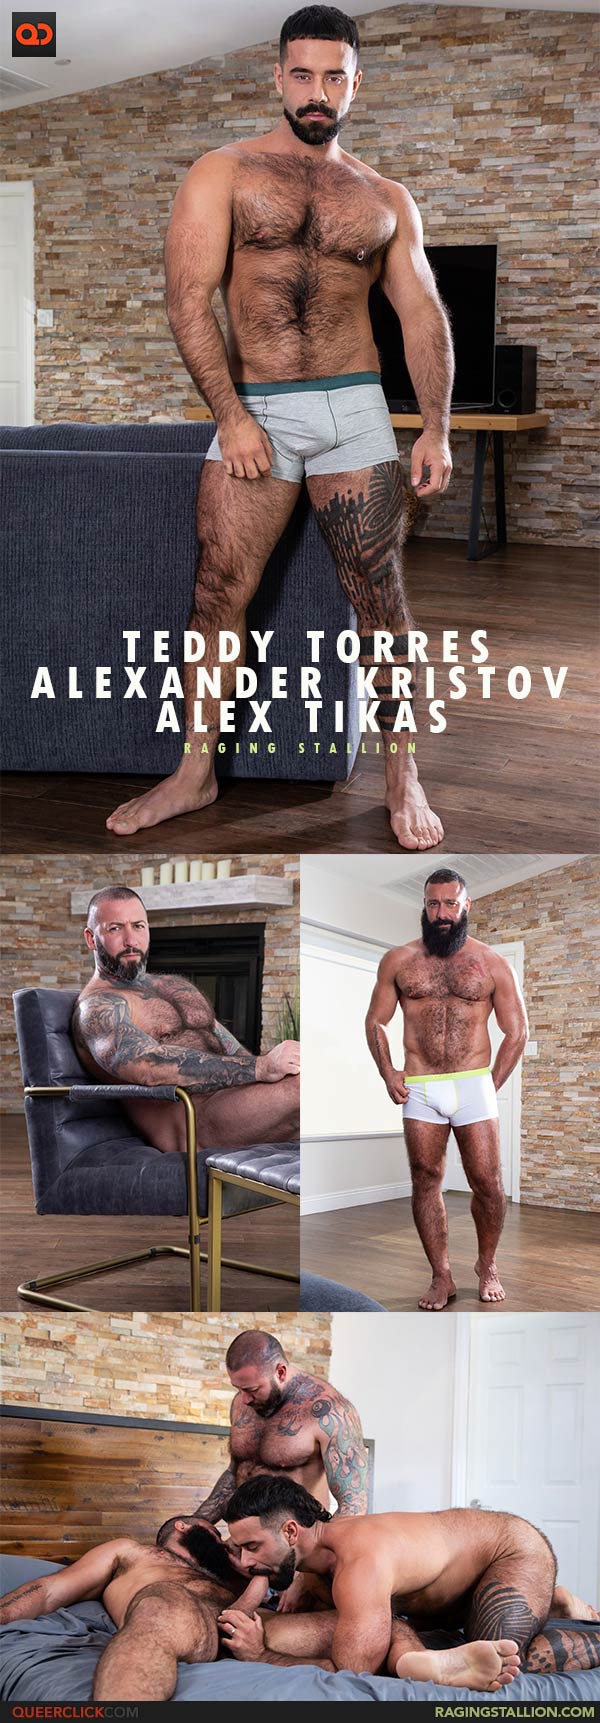 RagingStallion: Teddy Torres, Alexander Kristov and Alex Tikas